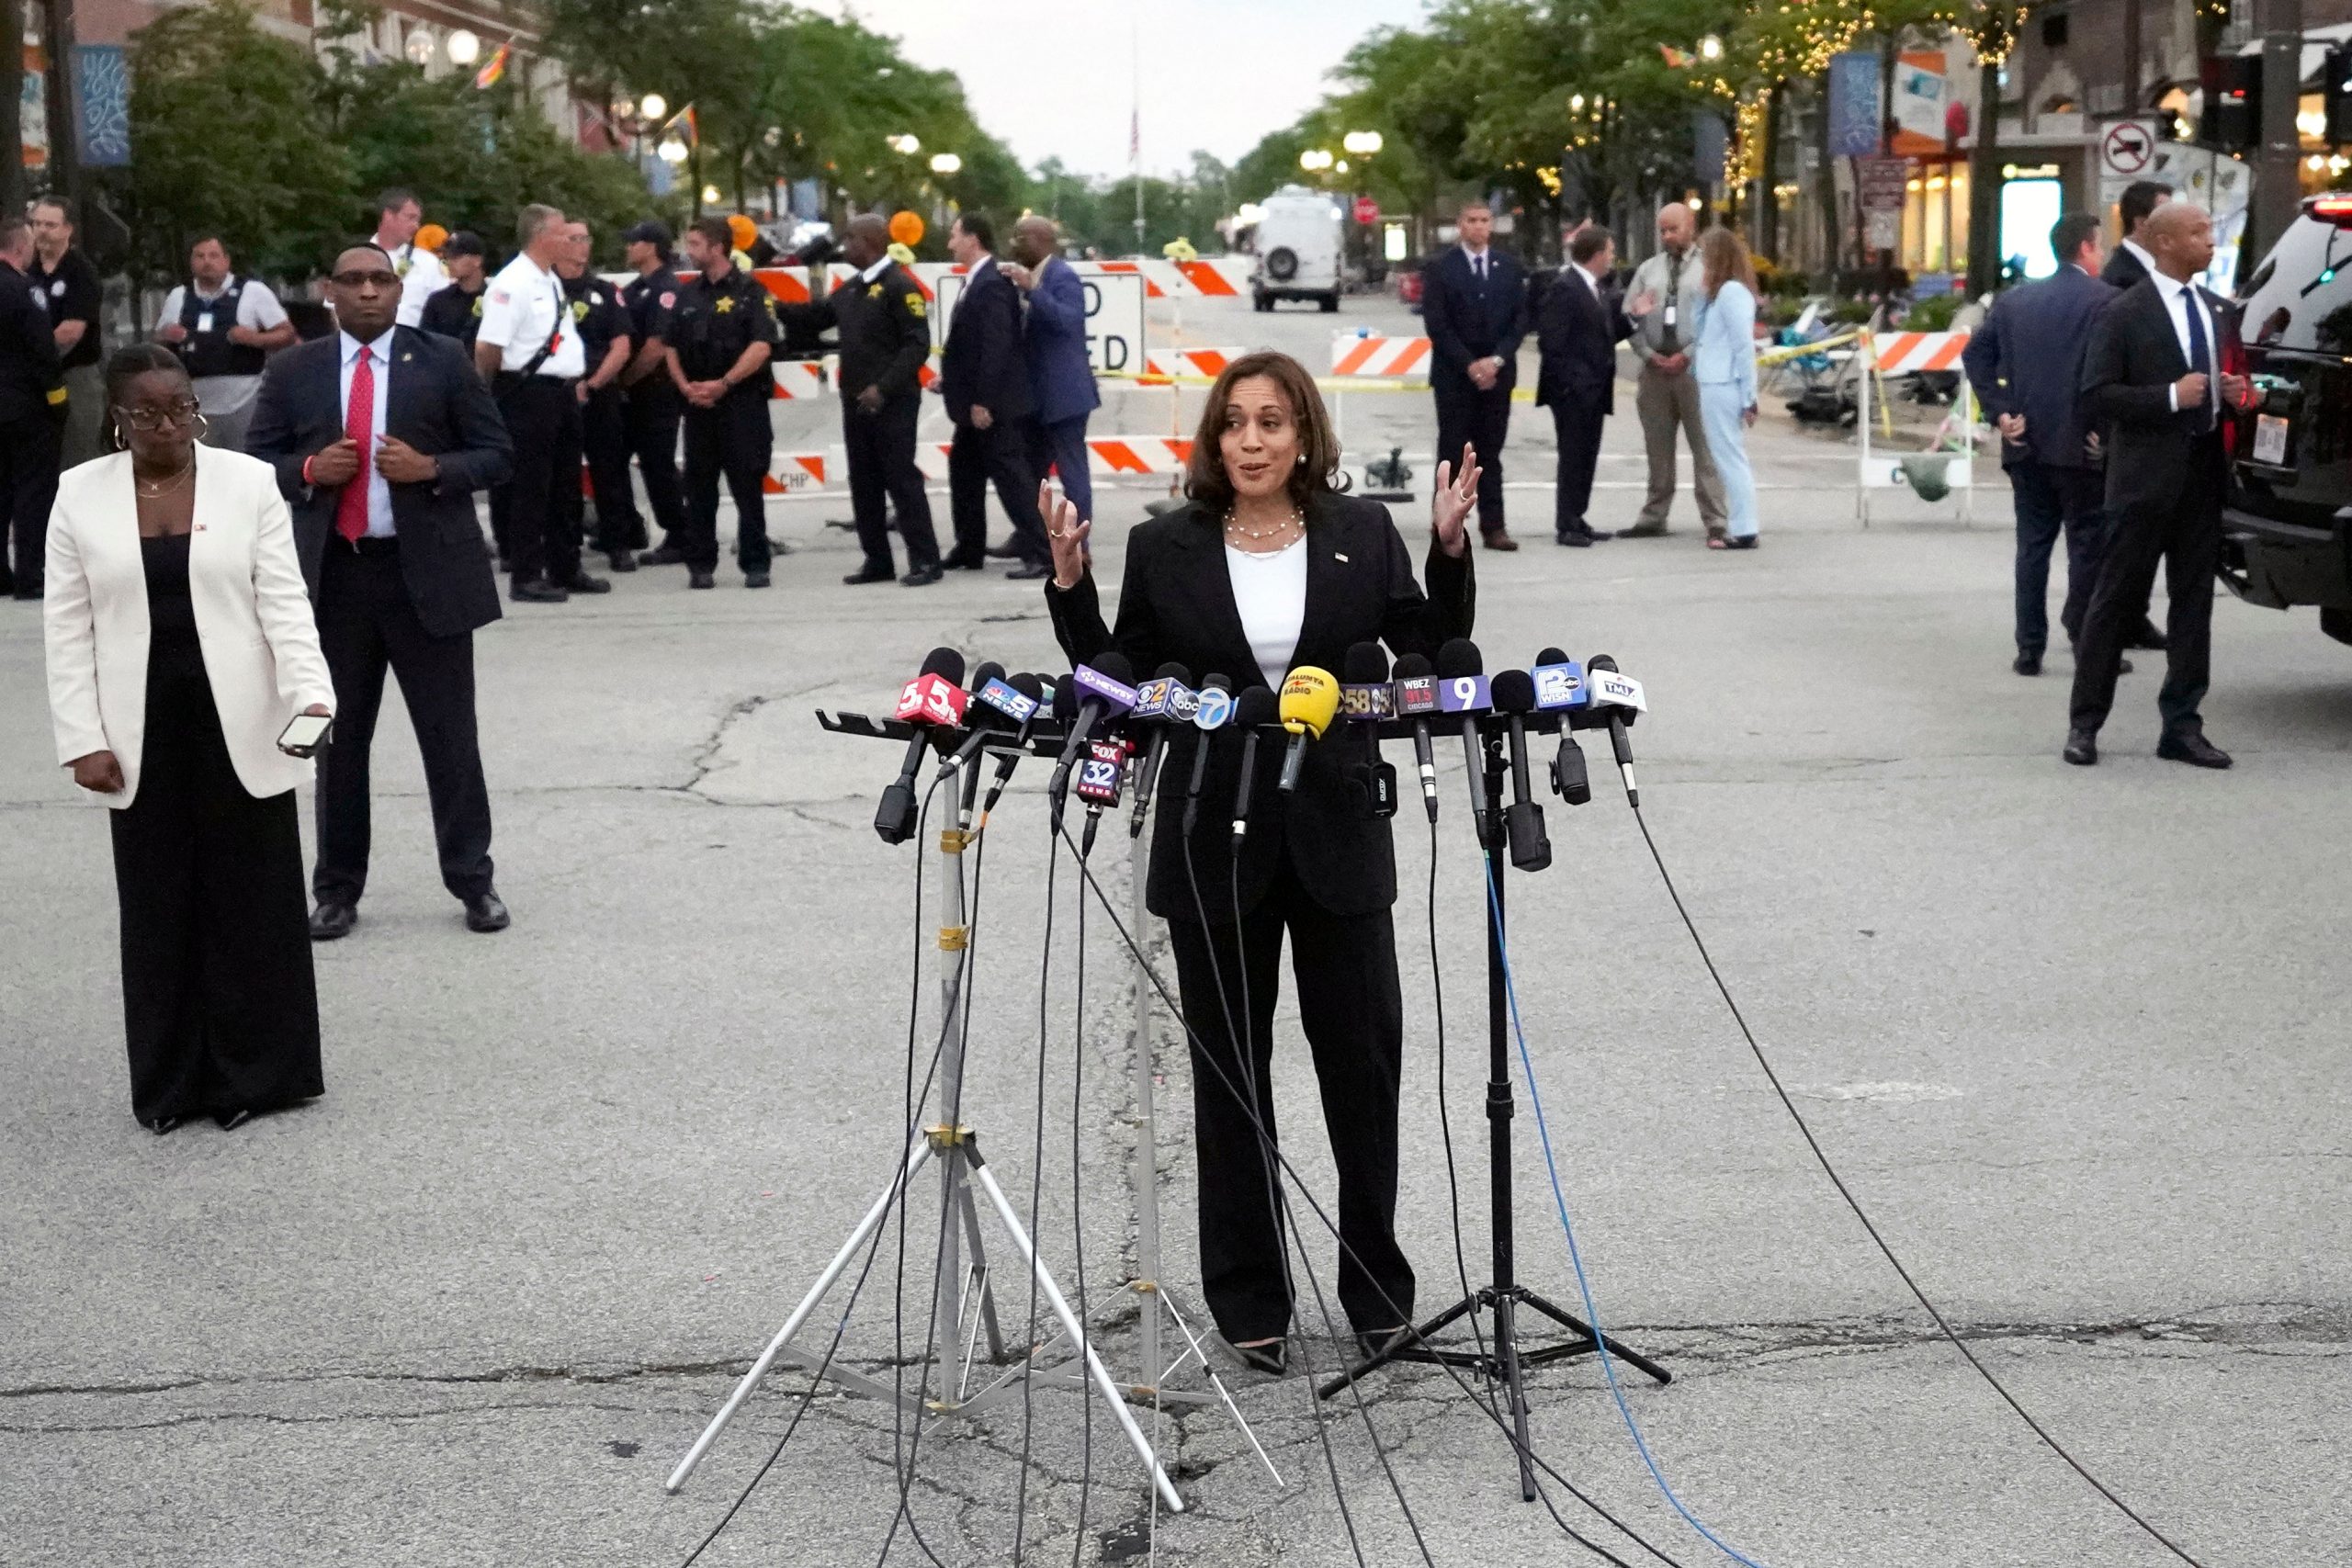 Highland Park shooting: US VP Harris addresses gun violence at ground zero